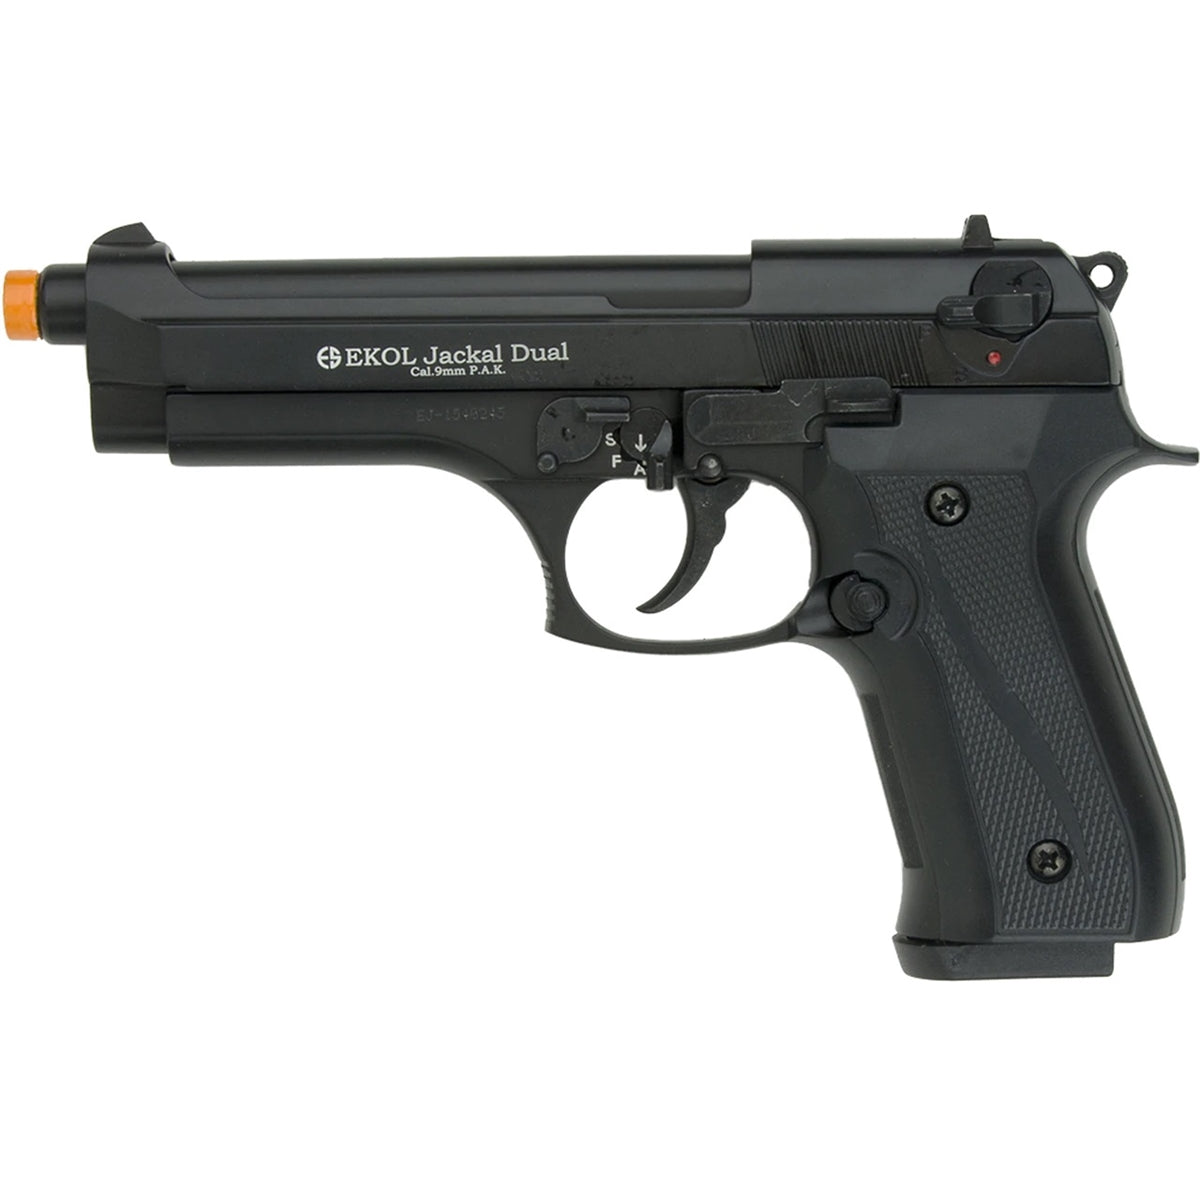 Blank-Firing Jackal Dual Magnum Pistol - Full Auto Front-Firing 9mm PAK - Black Finish